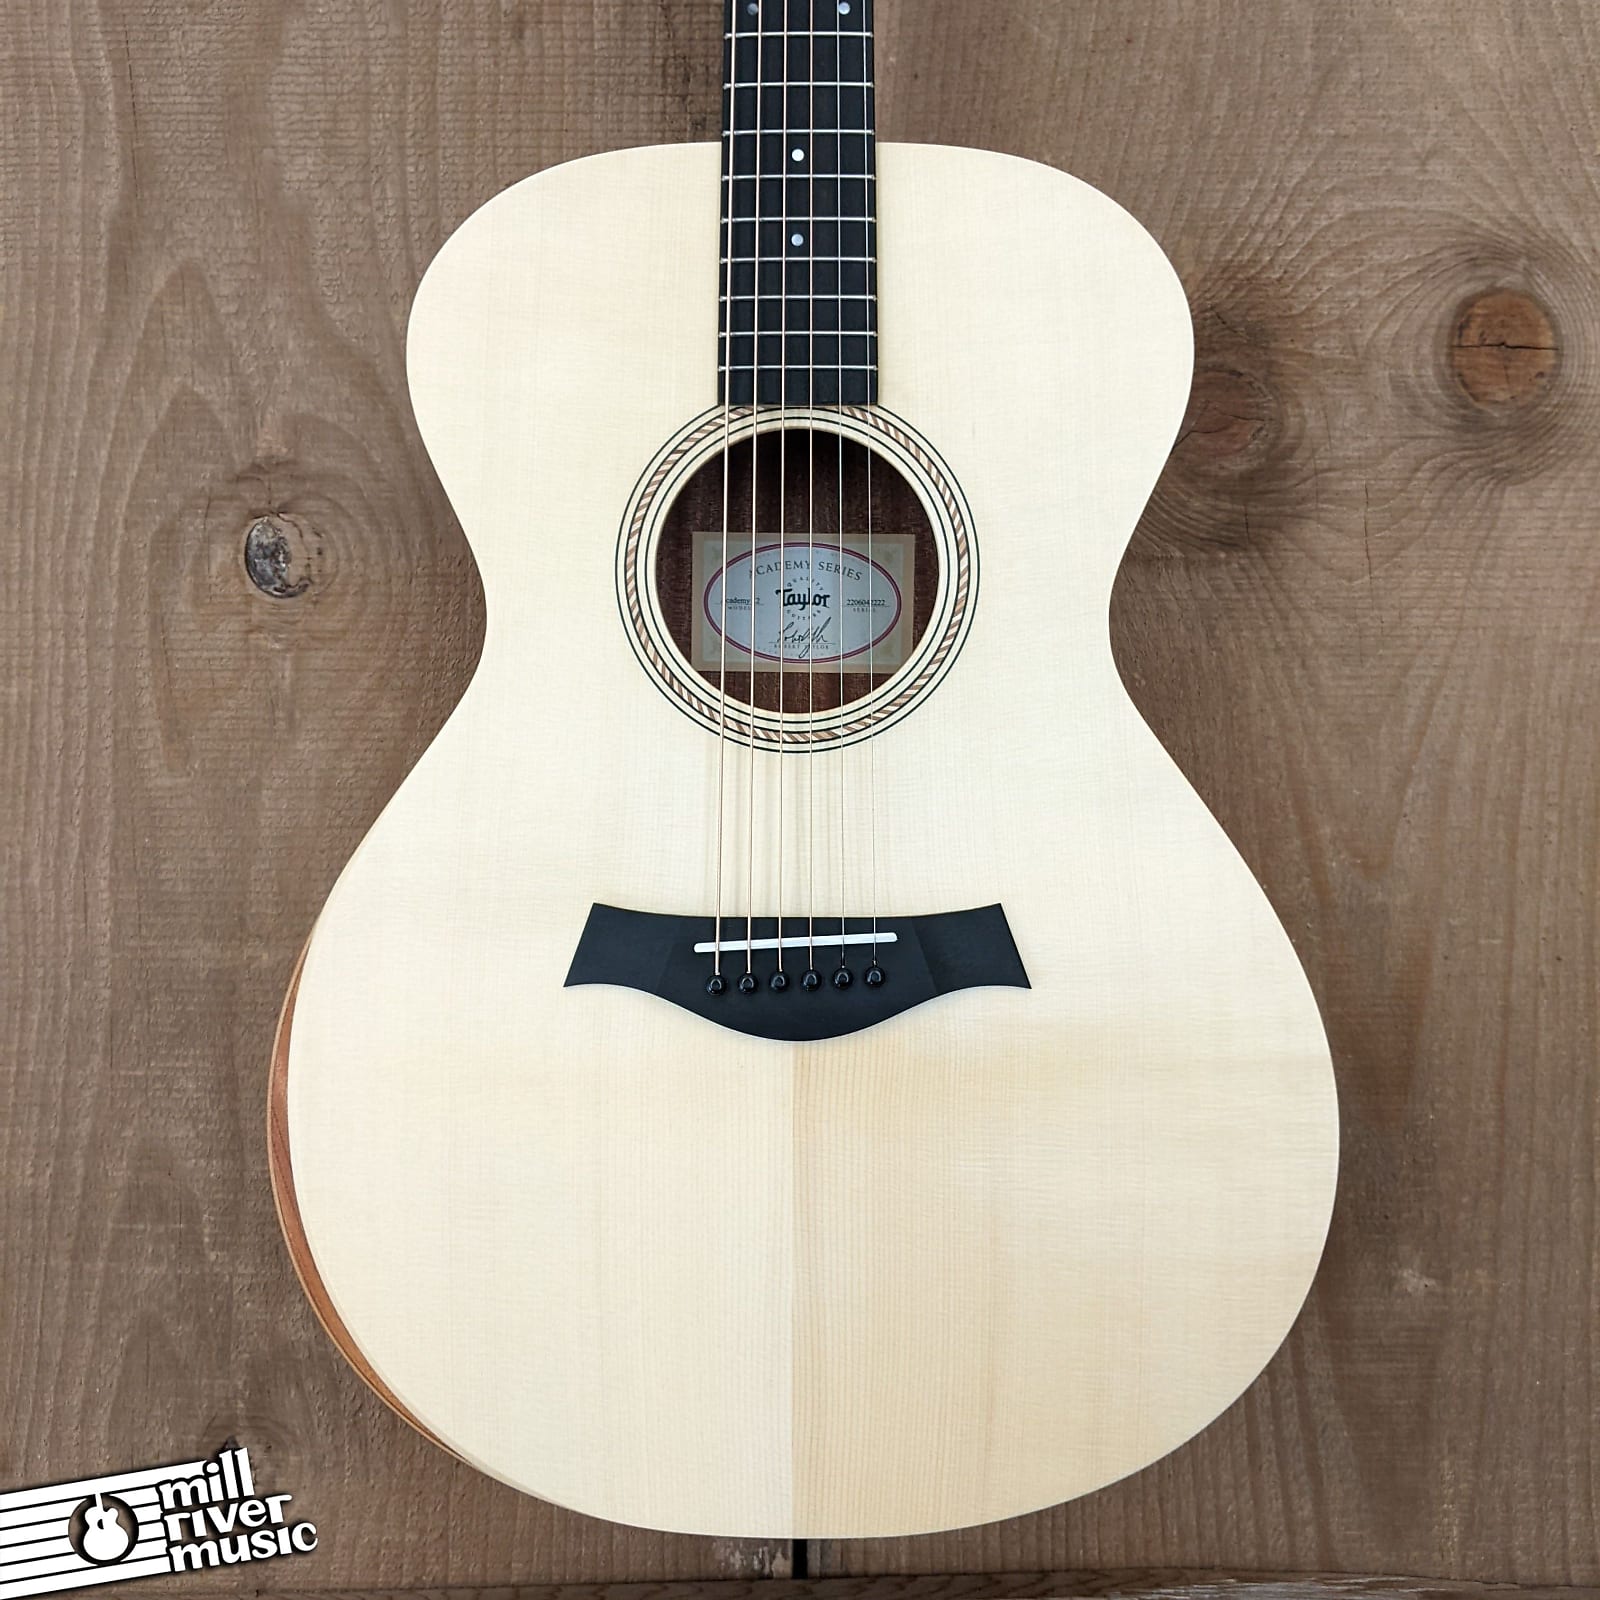 Taylor Academy 12 Acoustic Guitar w/gig bag